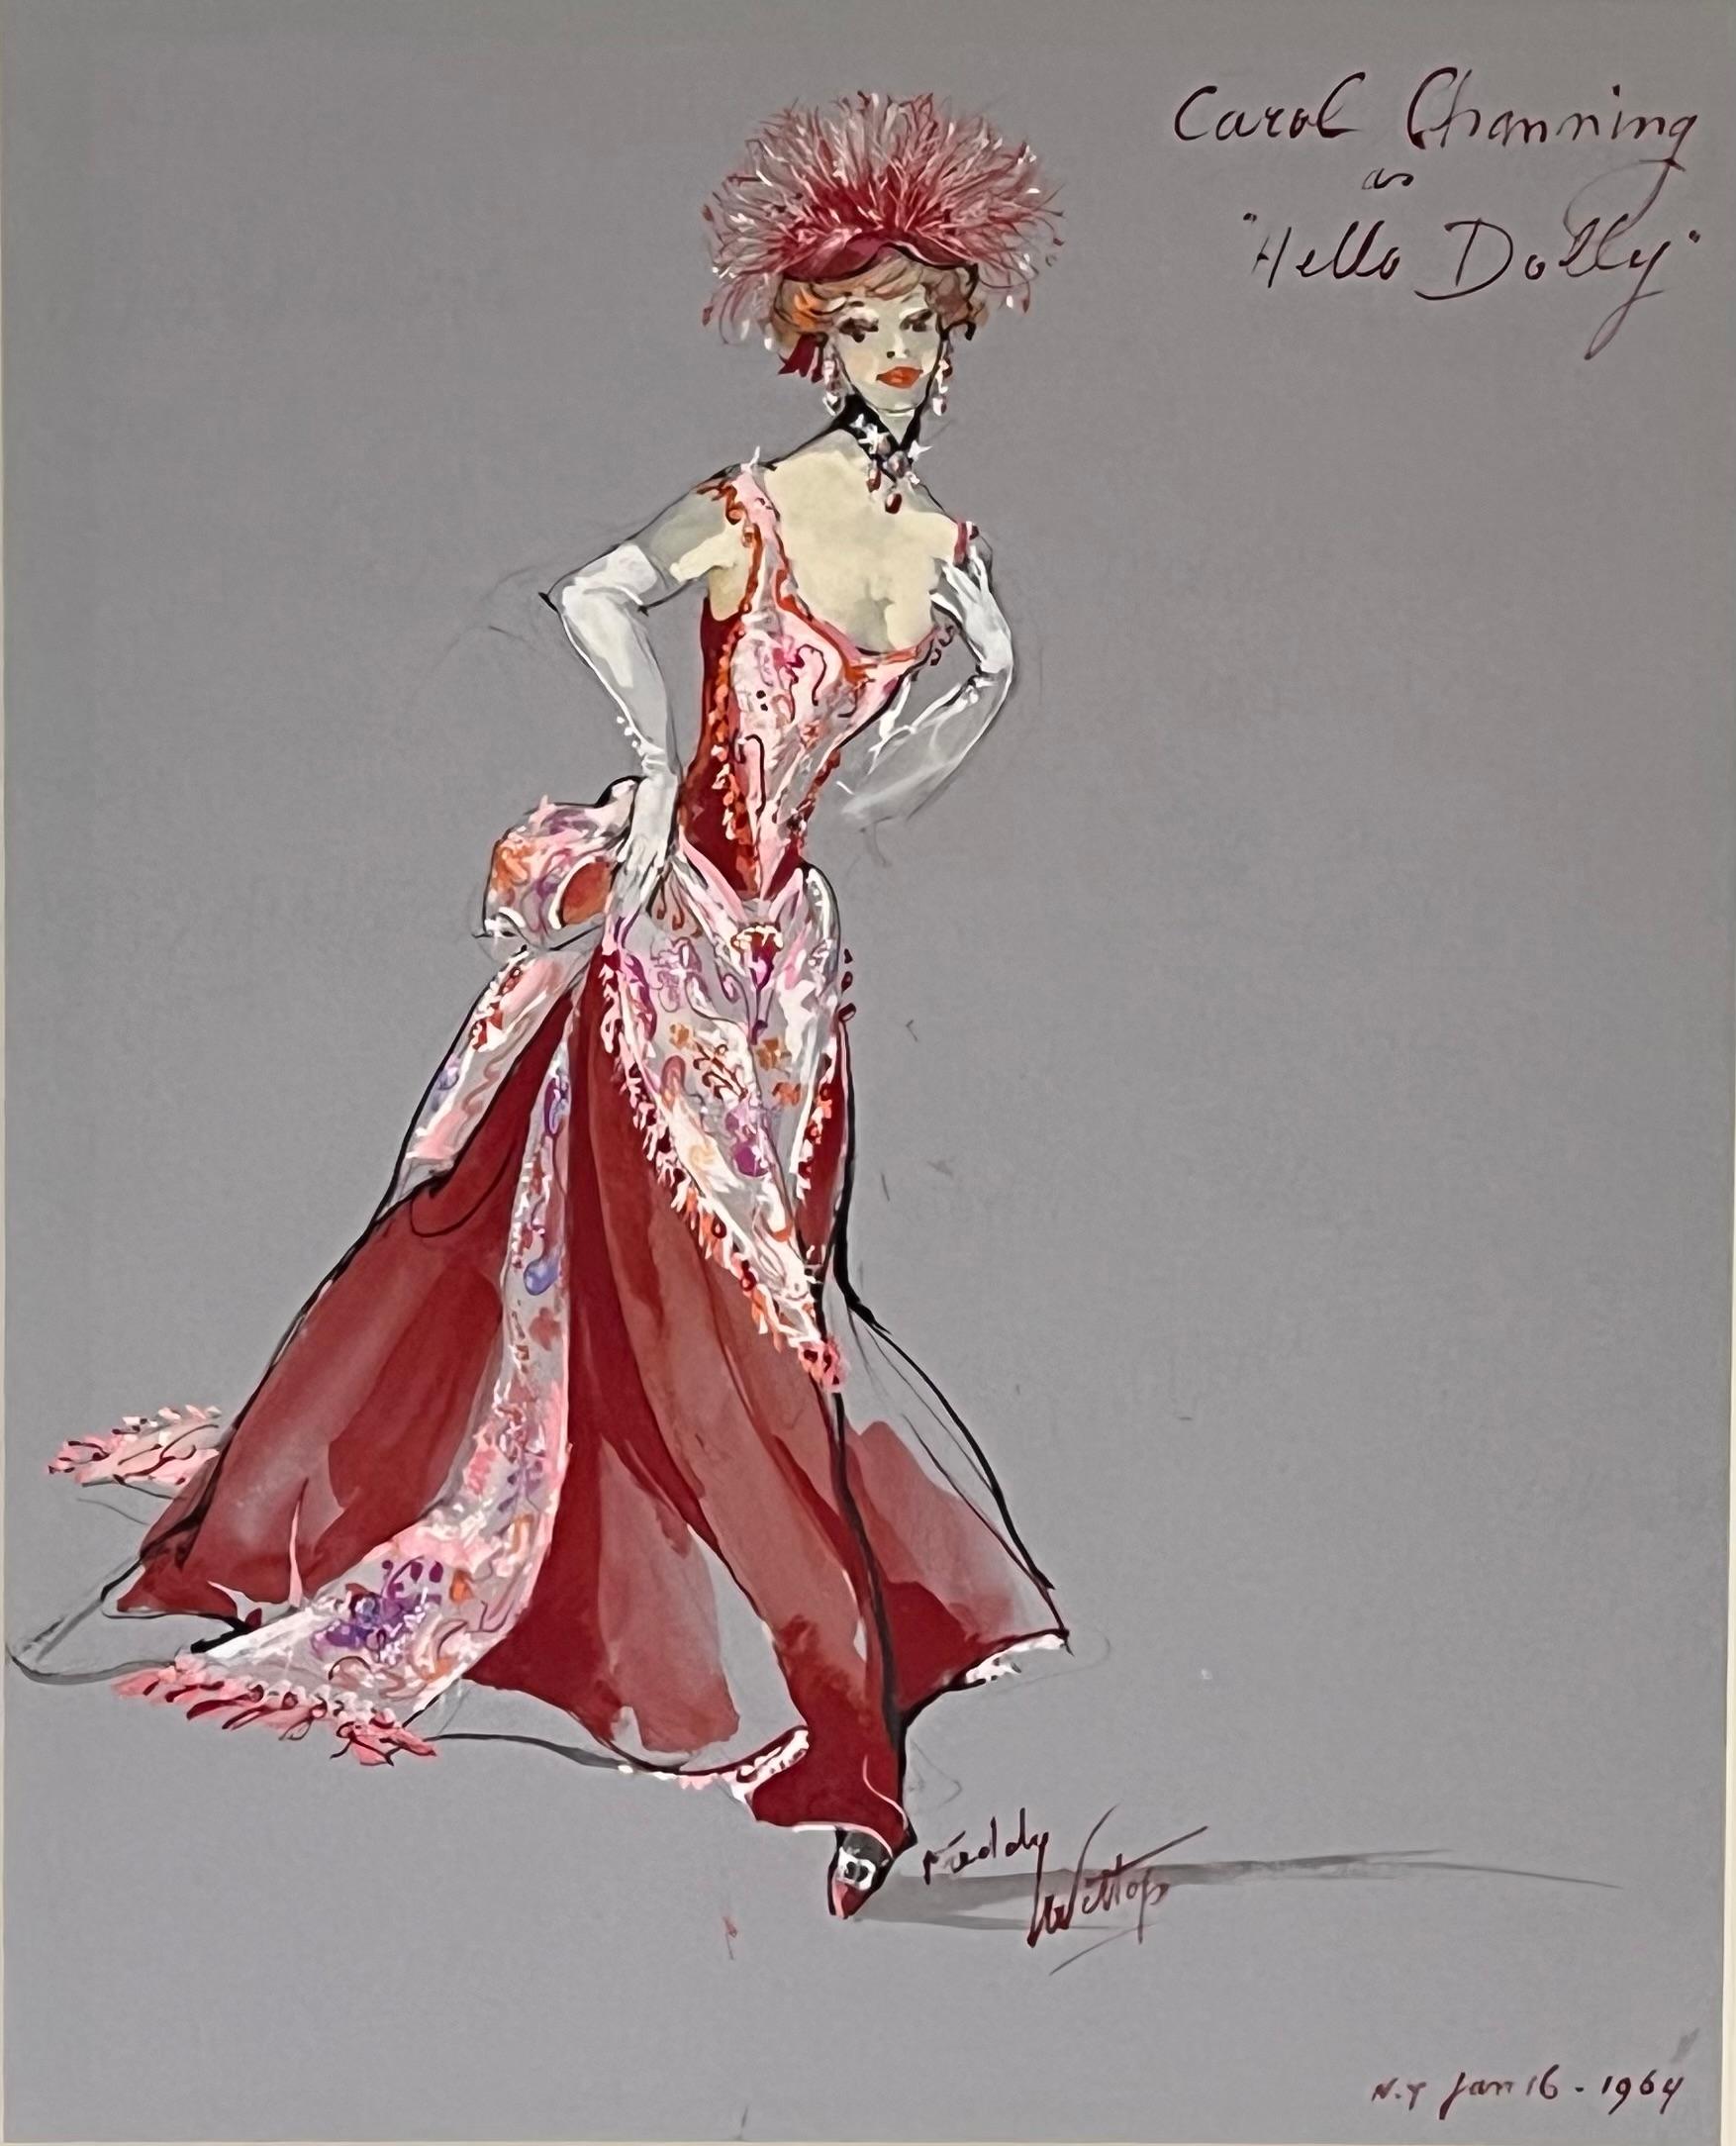 Freddy Wittop Figurative Art - Carol Channing "Hello Dolly!" Original Broadway Costume Drawing Tony Awards 1964